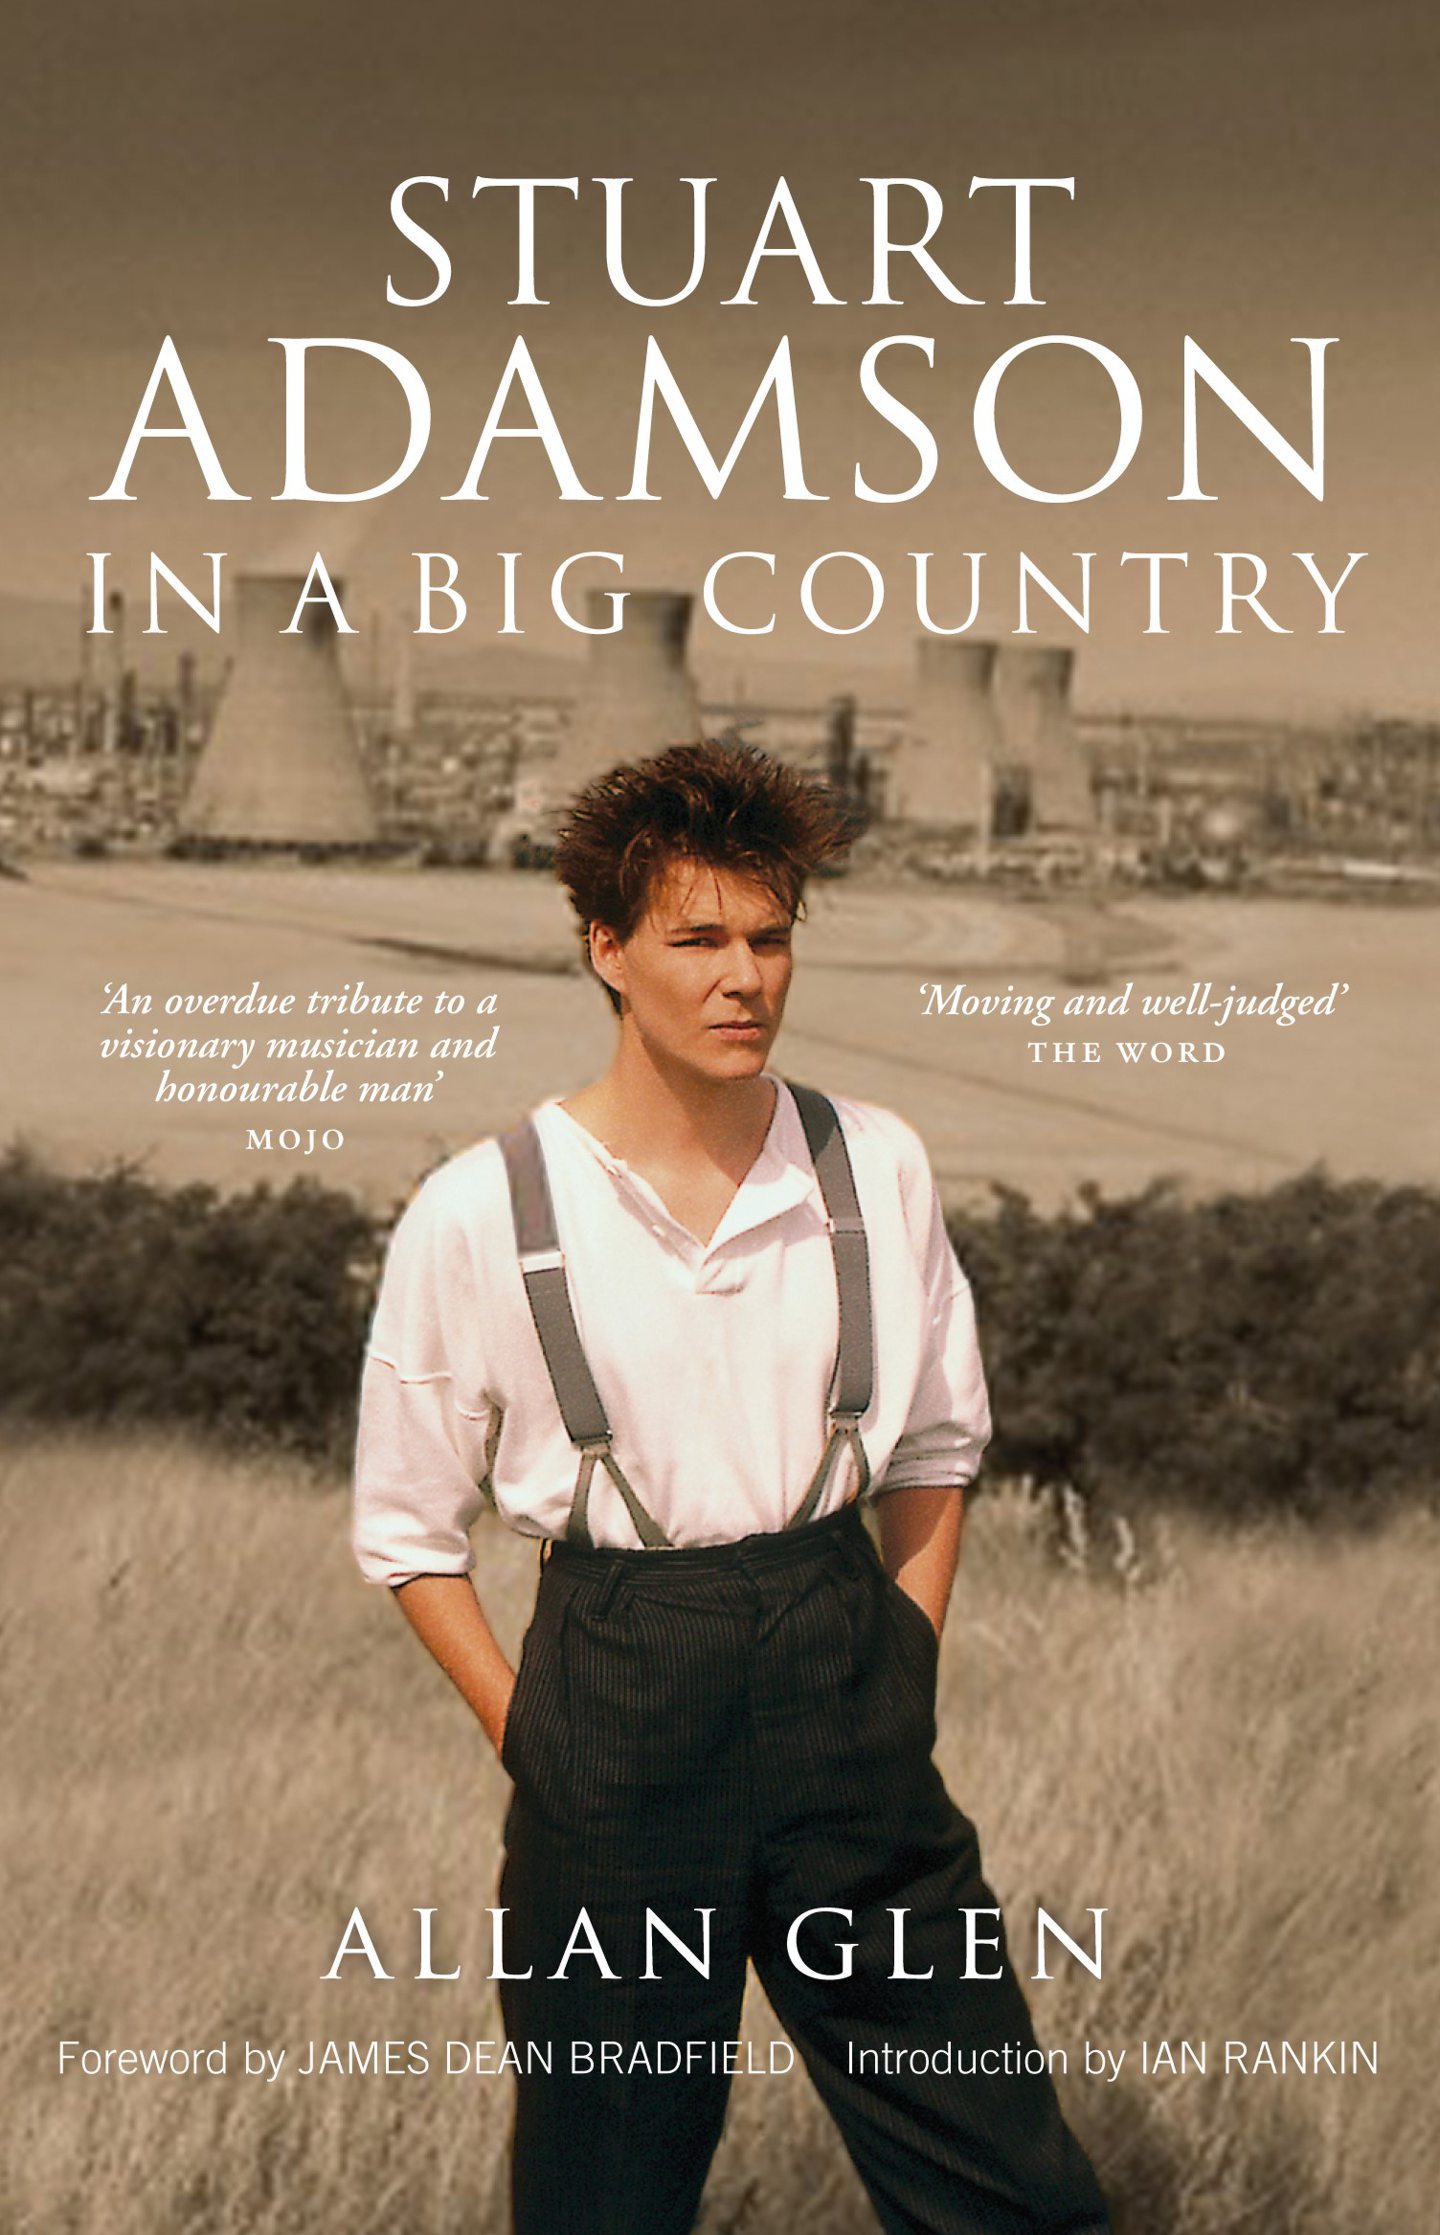 The Stuart Adamson biography by Allan Glen